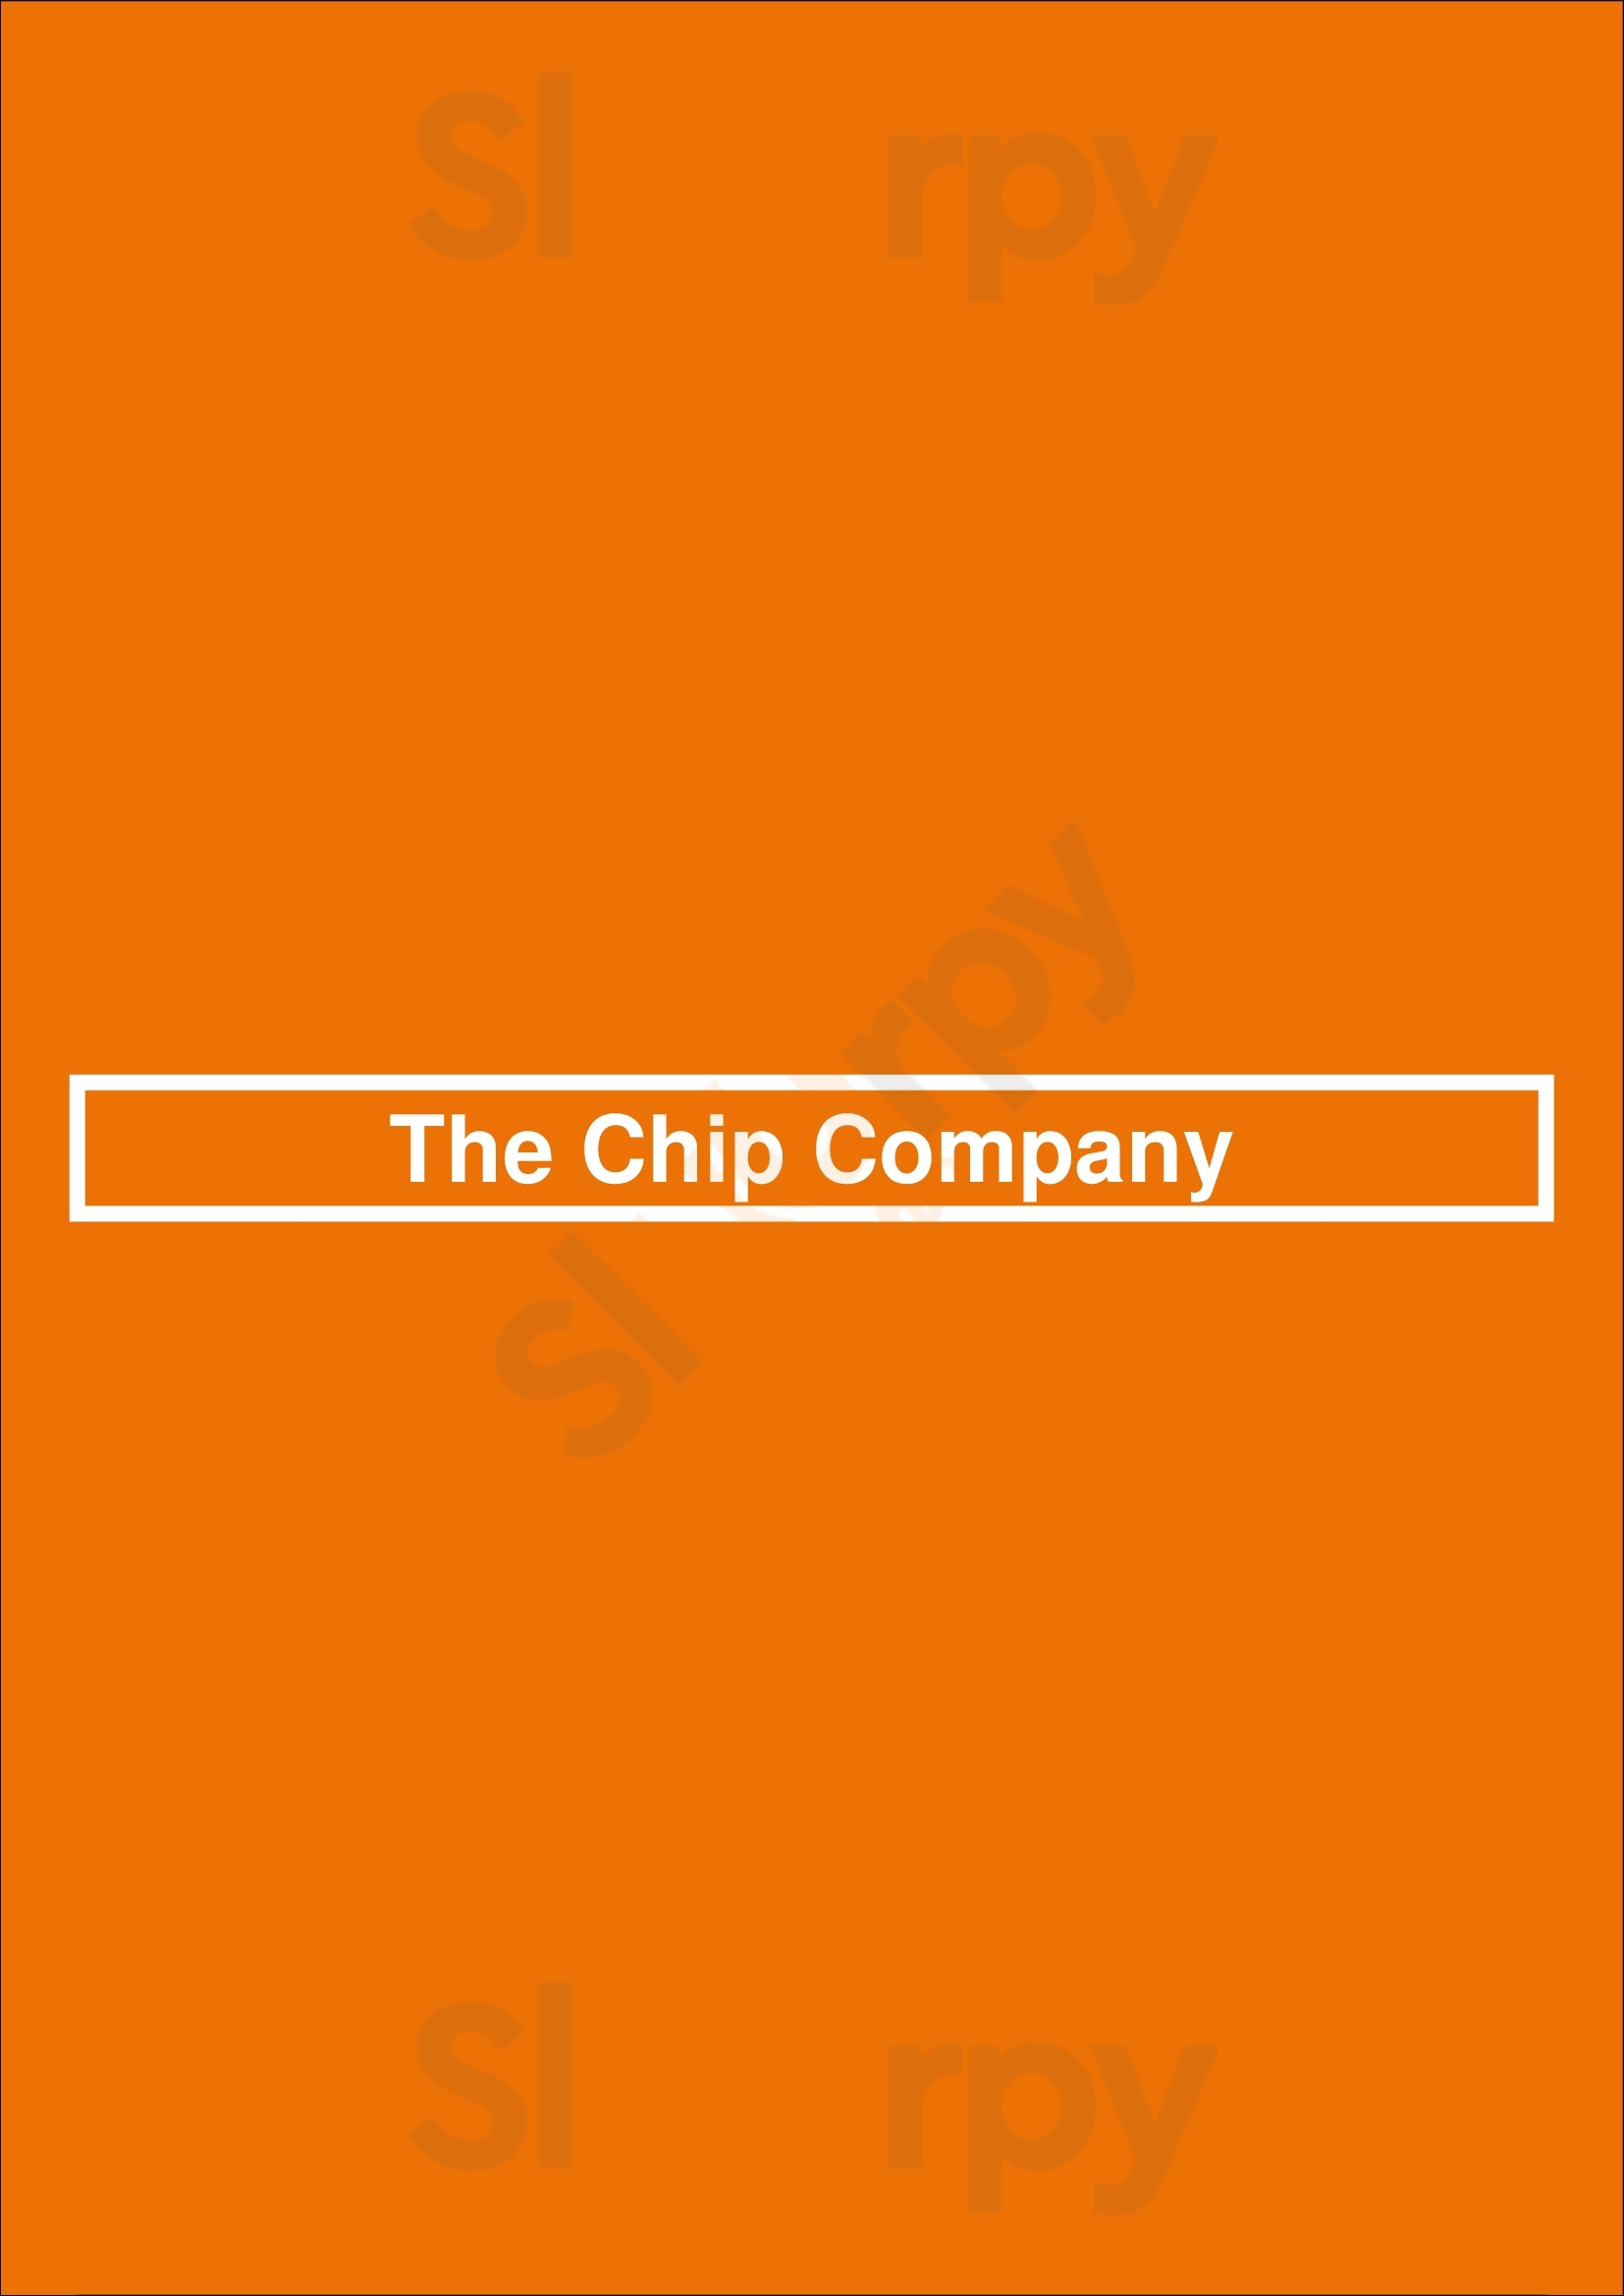 The Chip Company Belfast Menu - 1